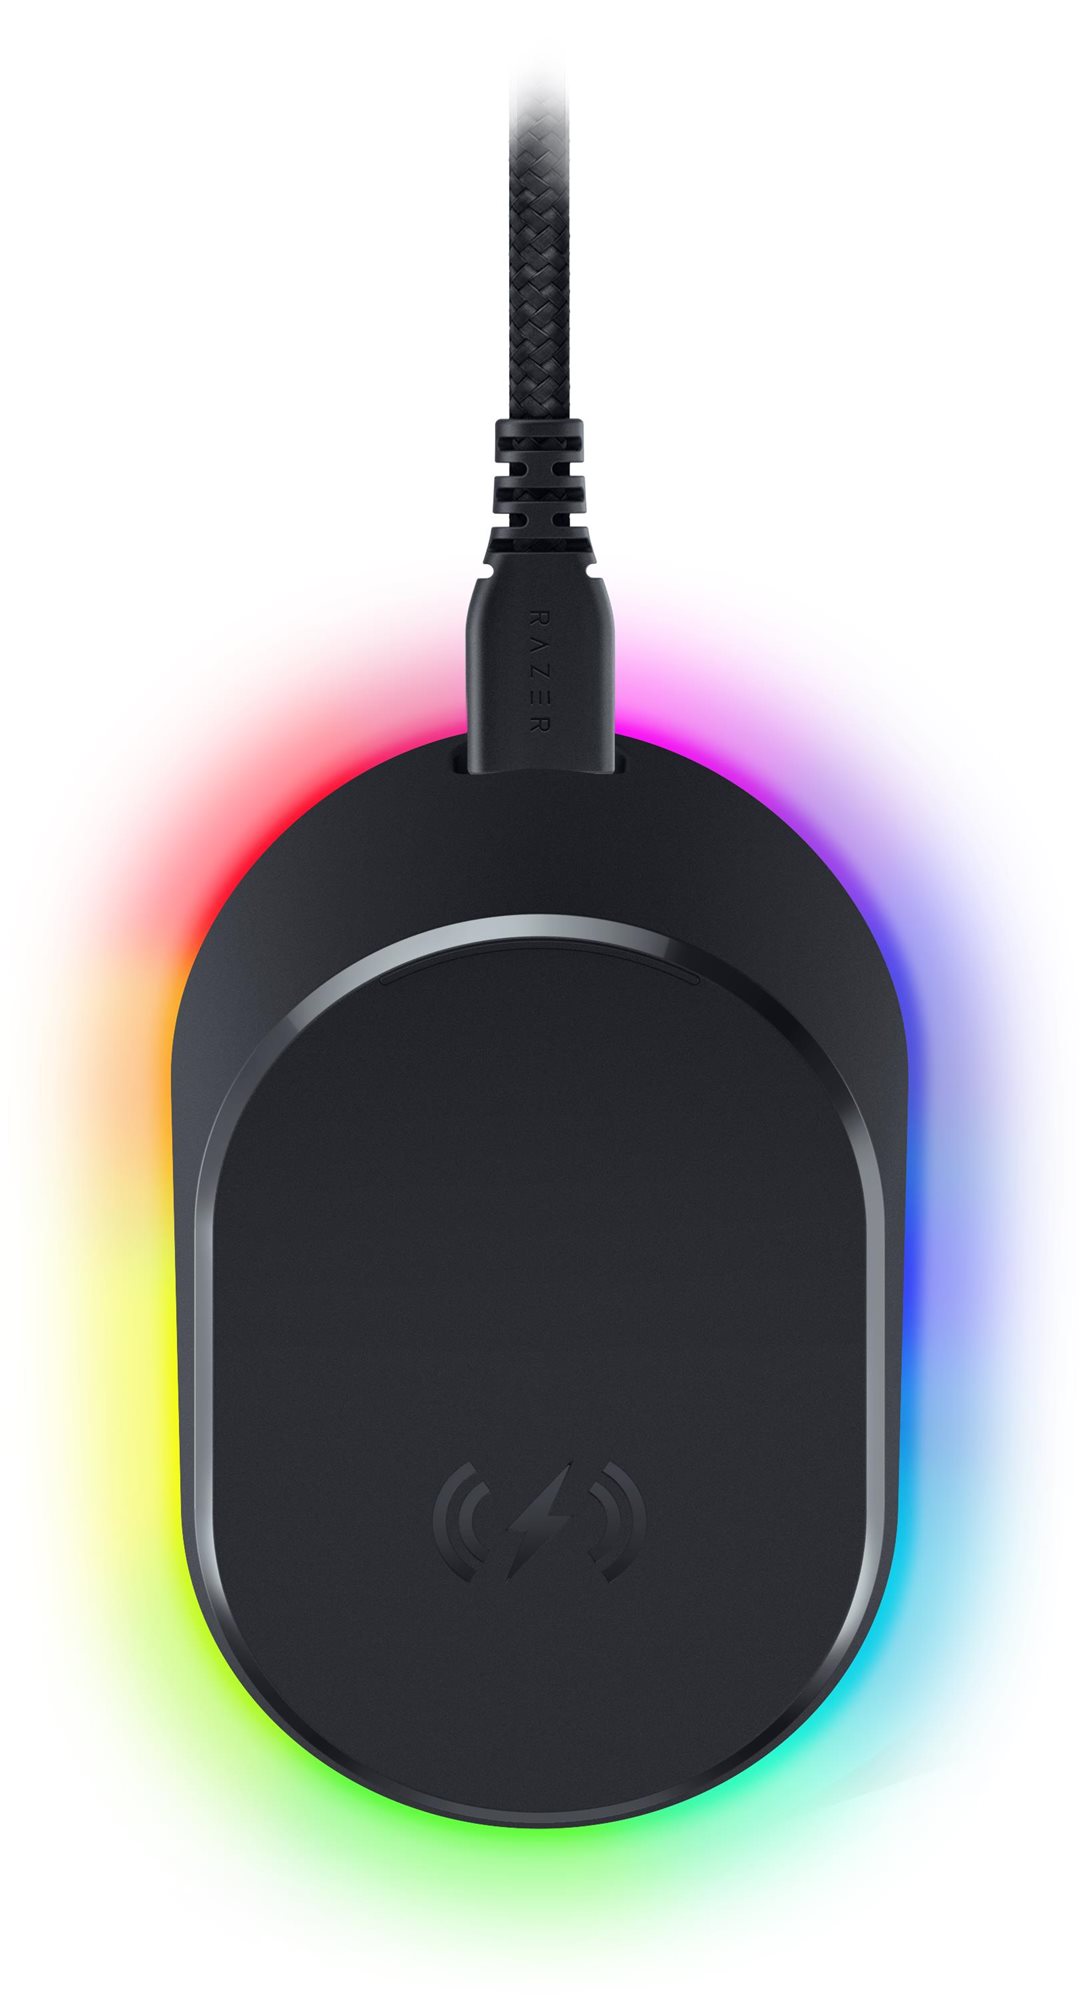 Razer Mouse Dock Pro + Wireless Charging Puck Bundle